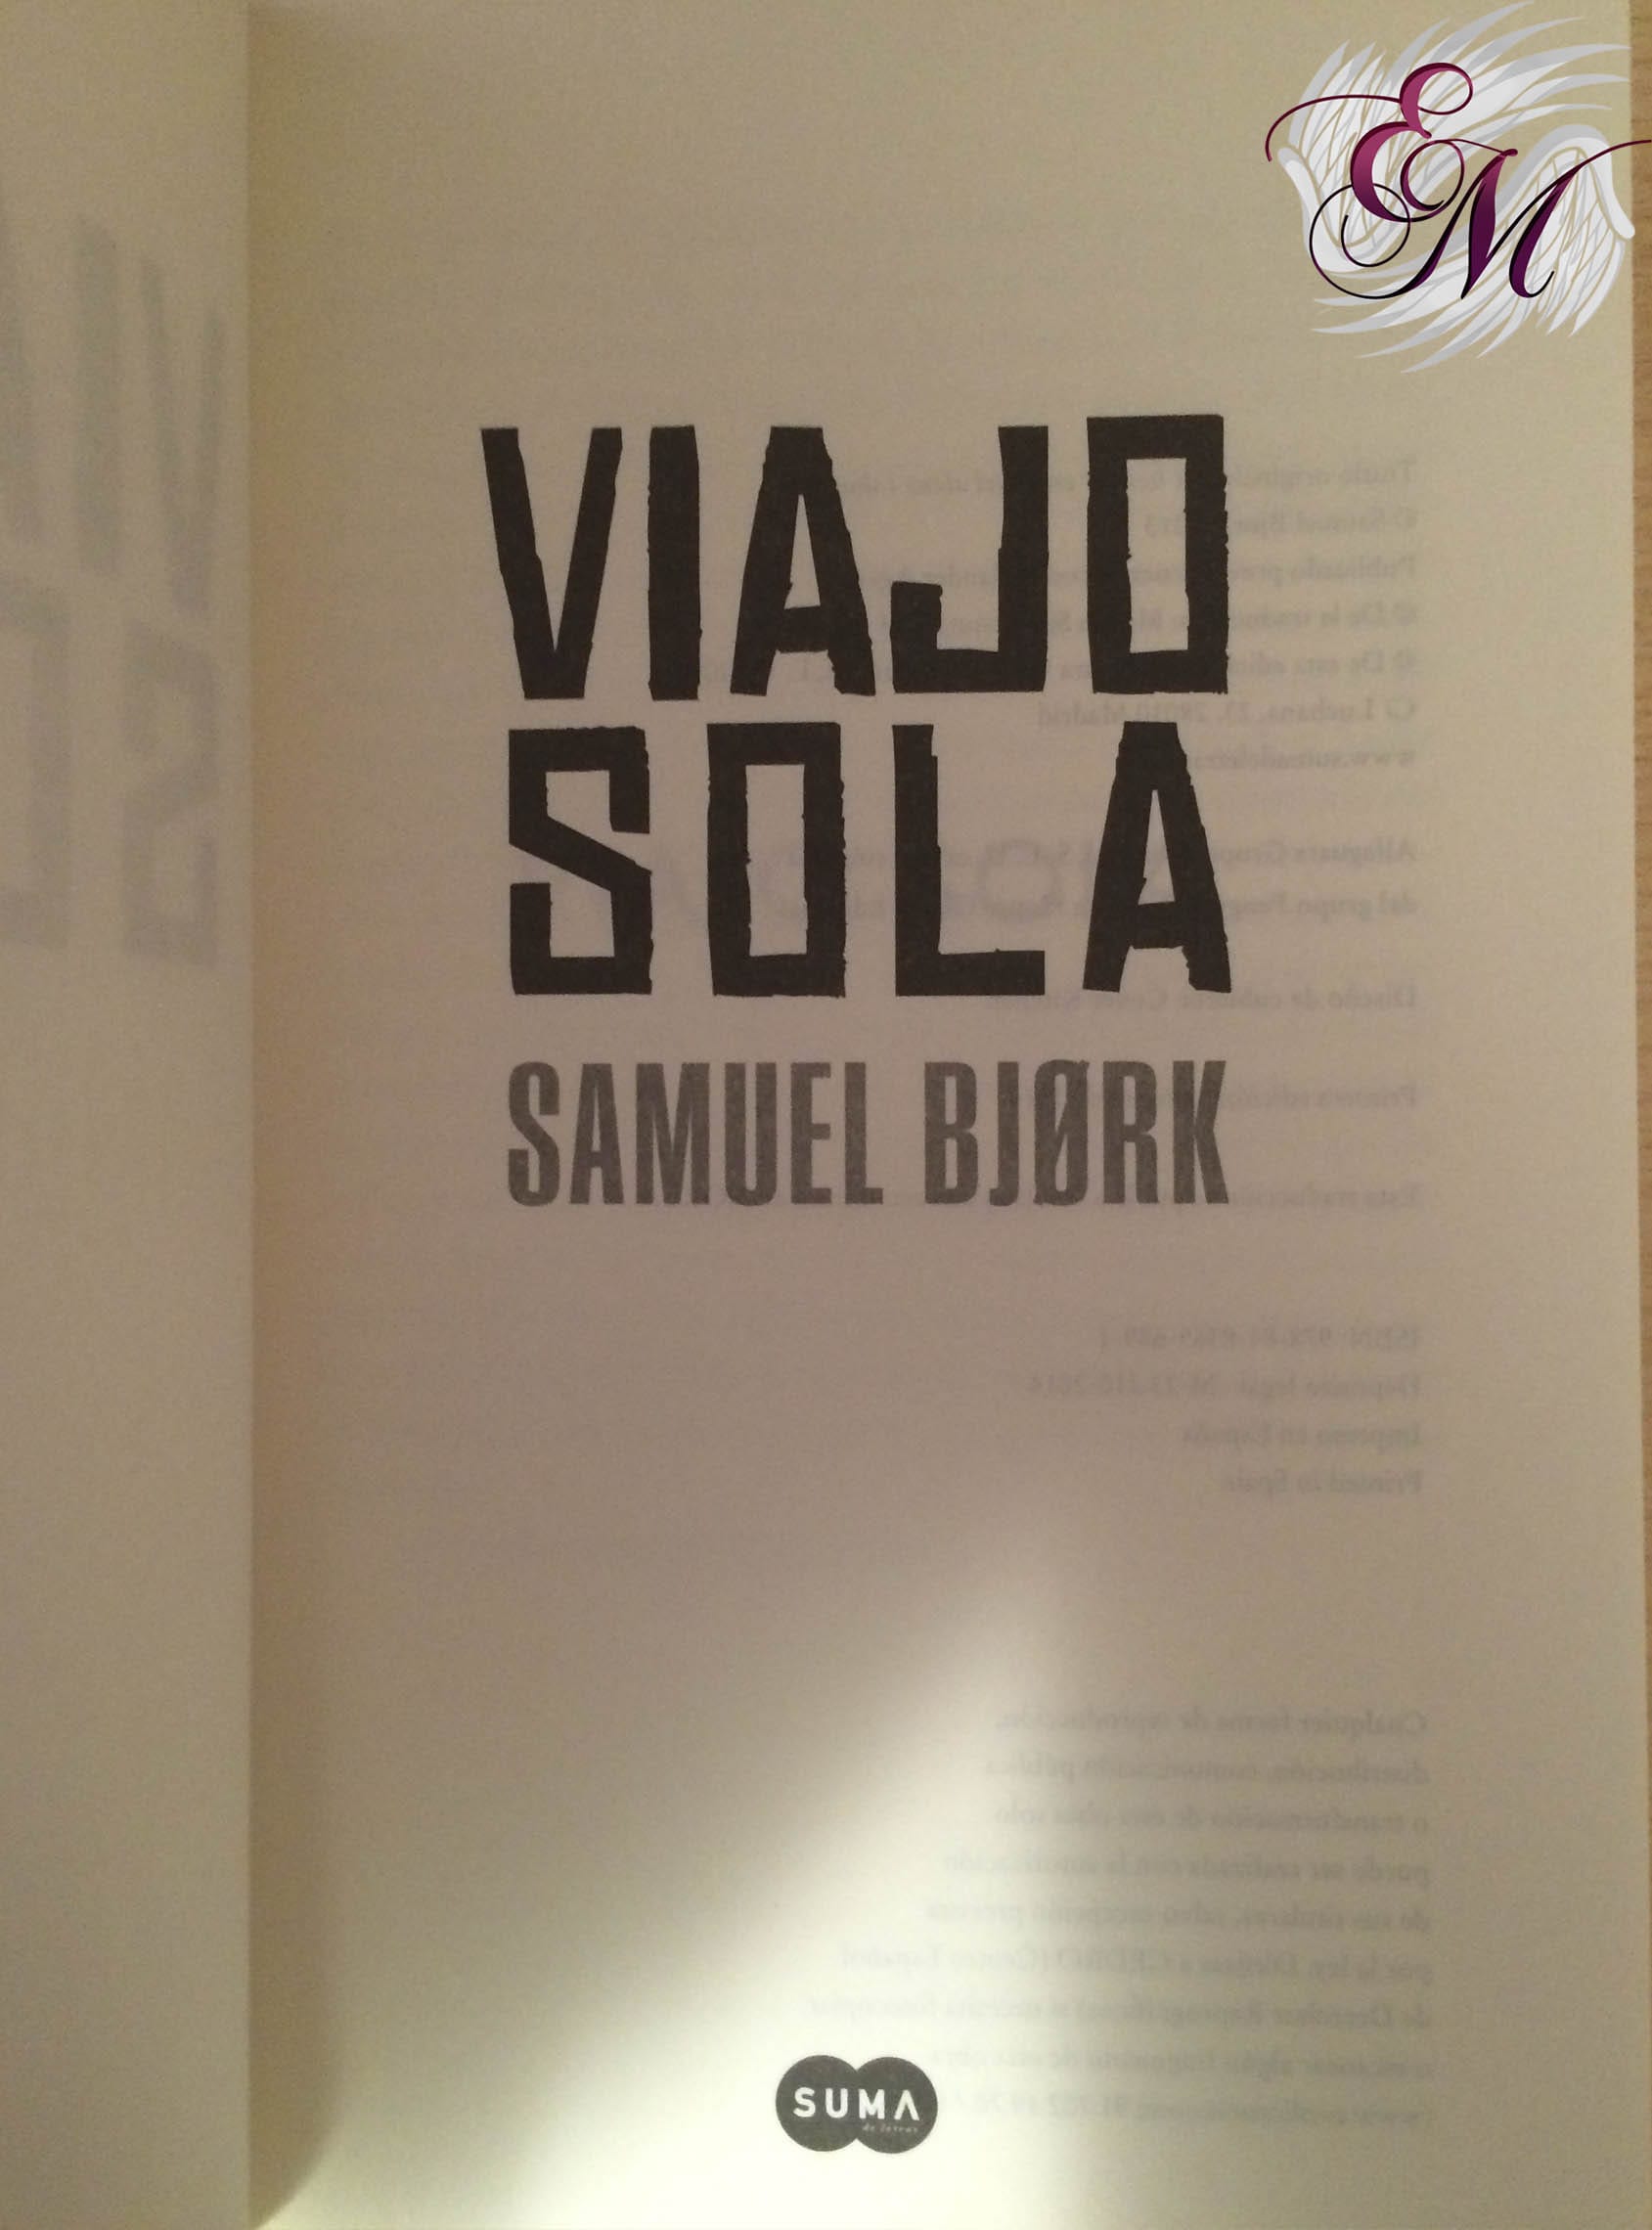 Viajo sola, de Samuel Bjørk - Reseña